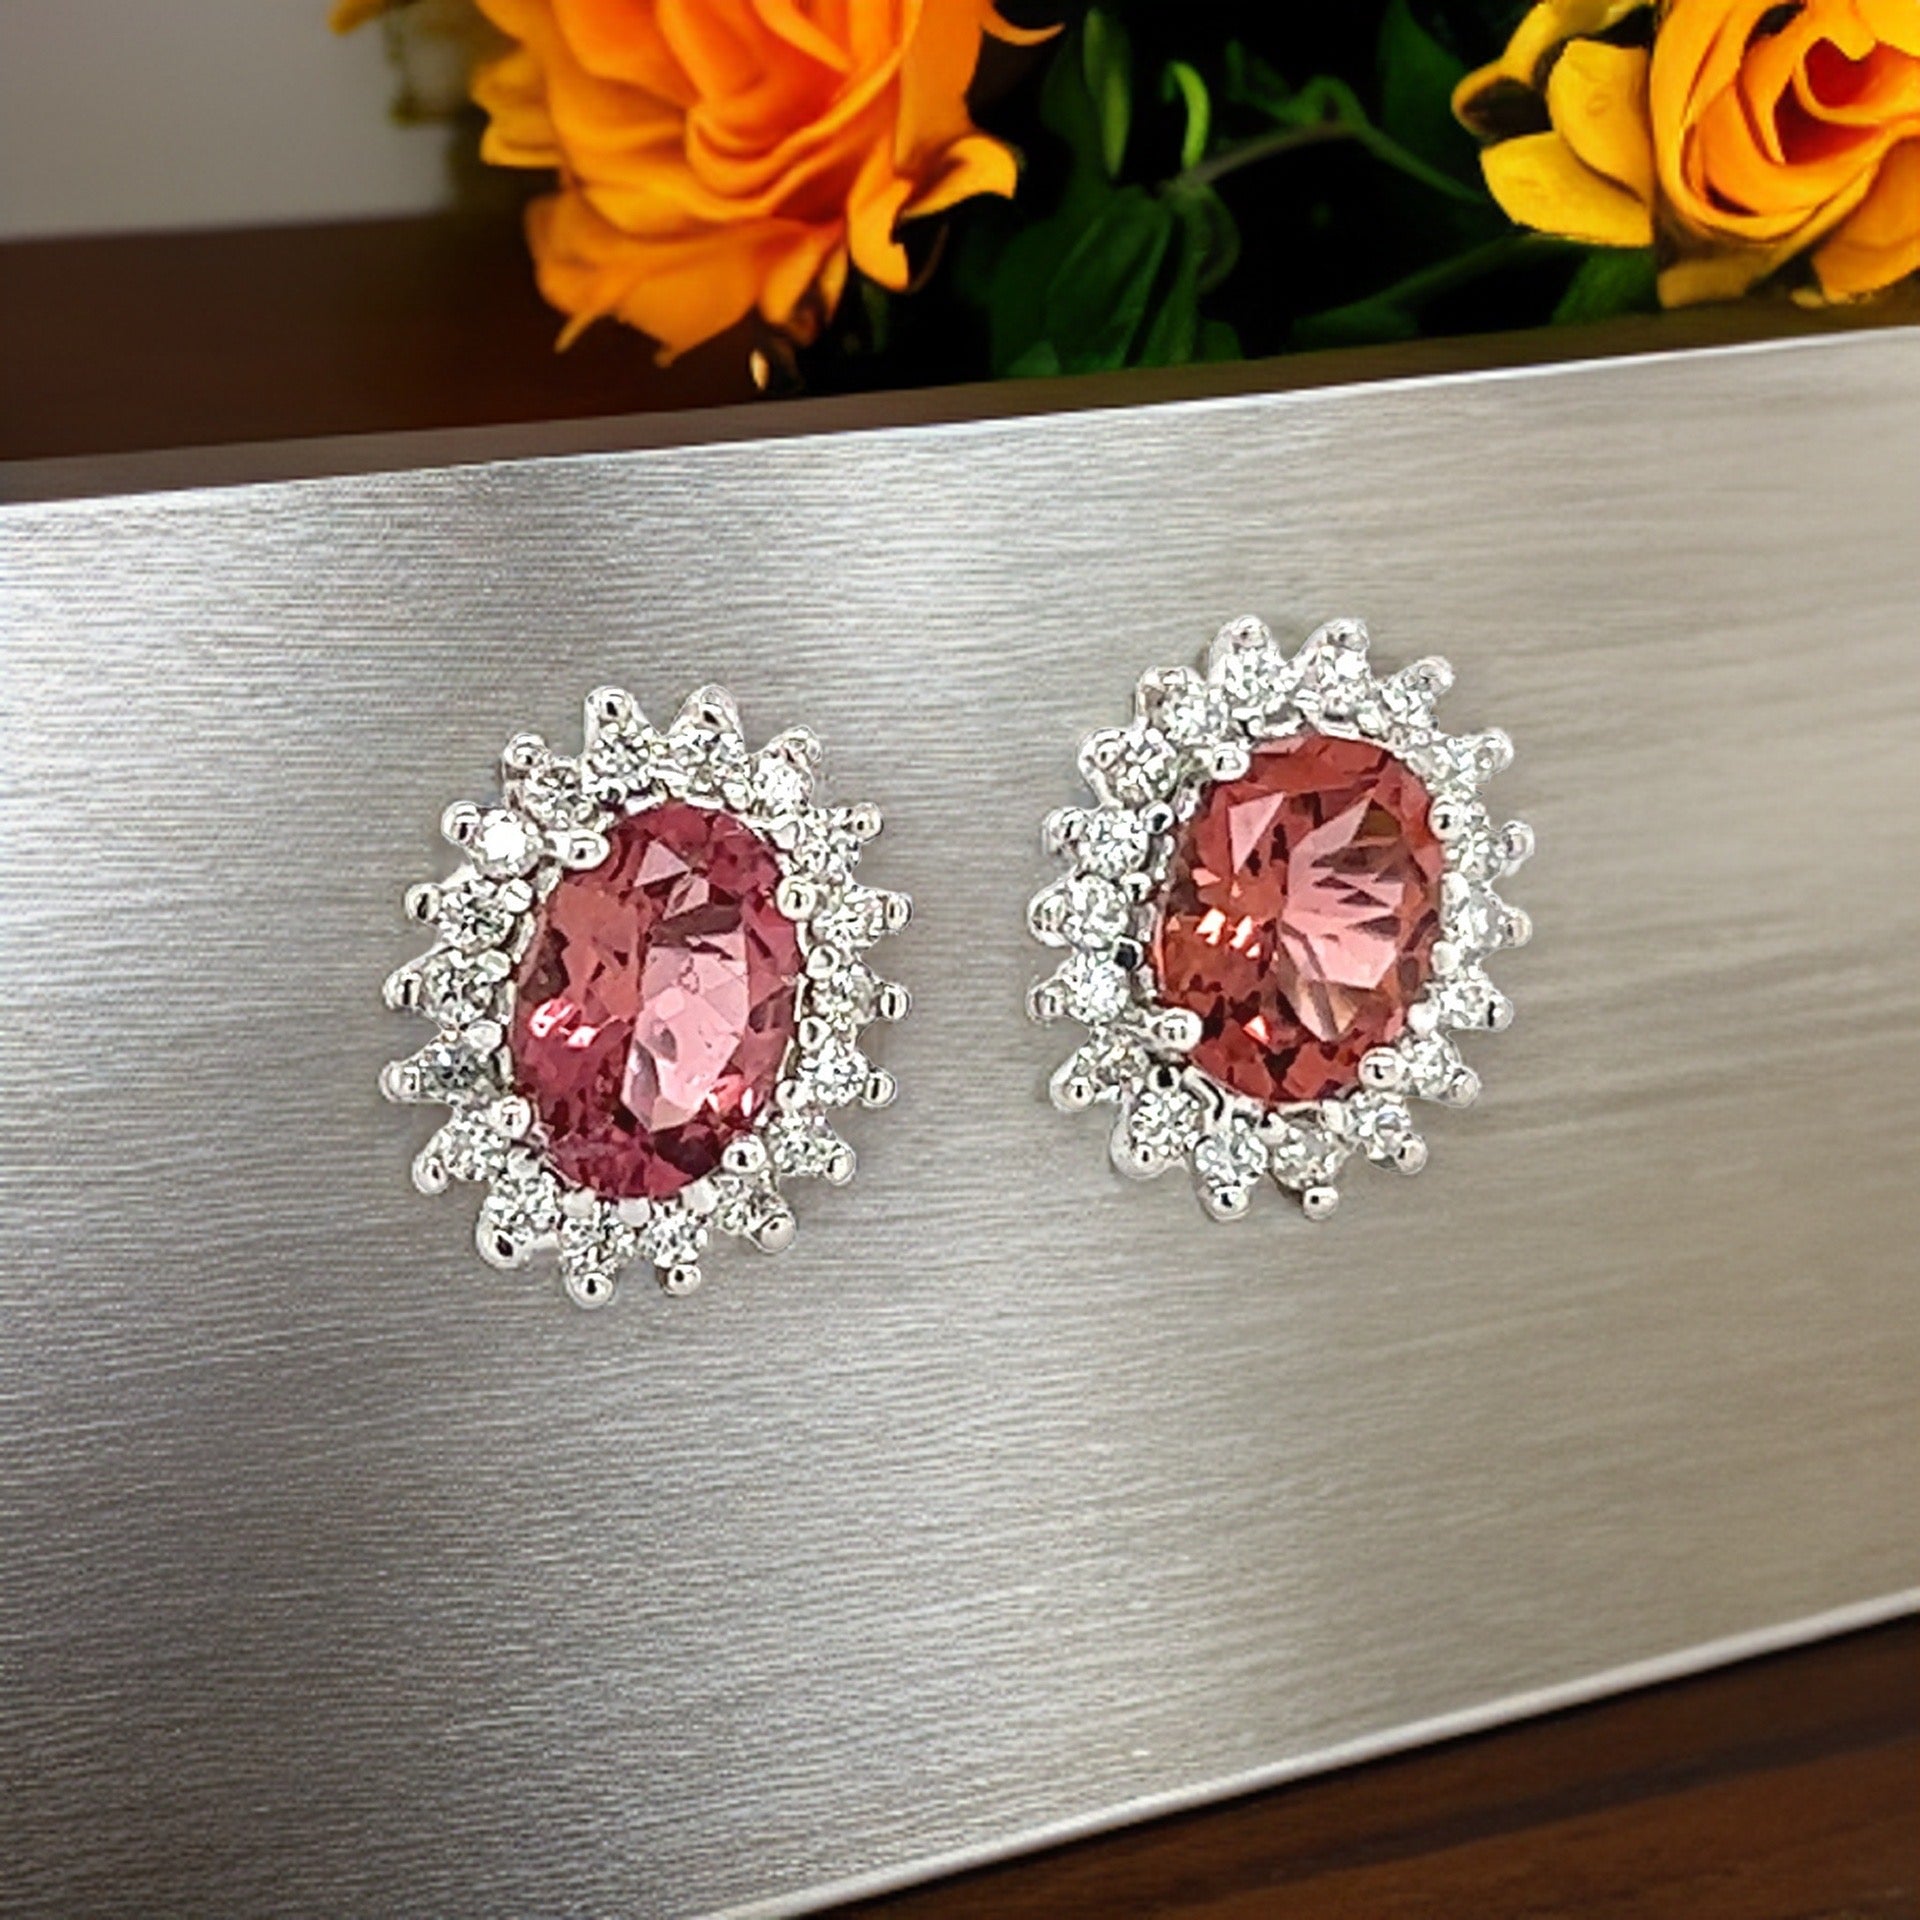 Natural Tourmaline Diamond Earrings 14k Gold 1.94 TCW Certified $3,950 215100 - Certified Fine Jewelry